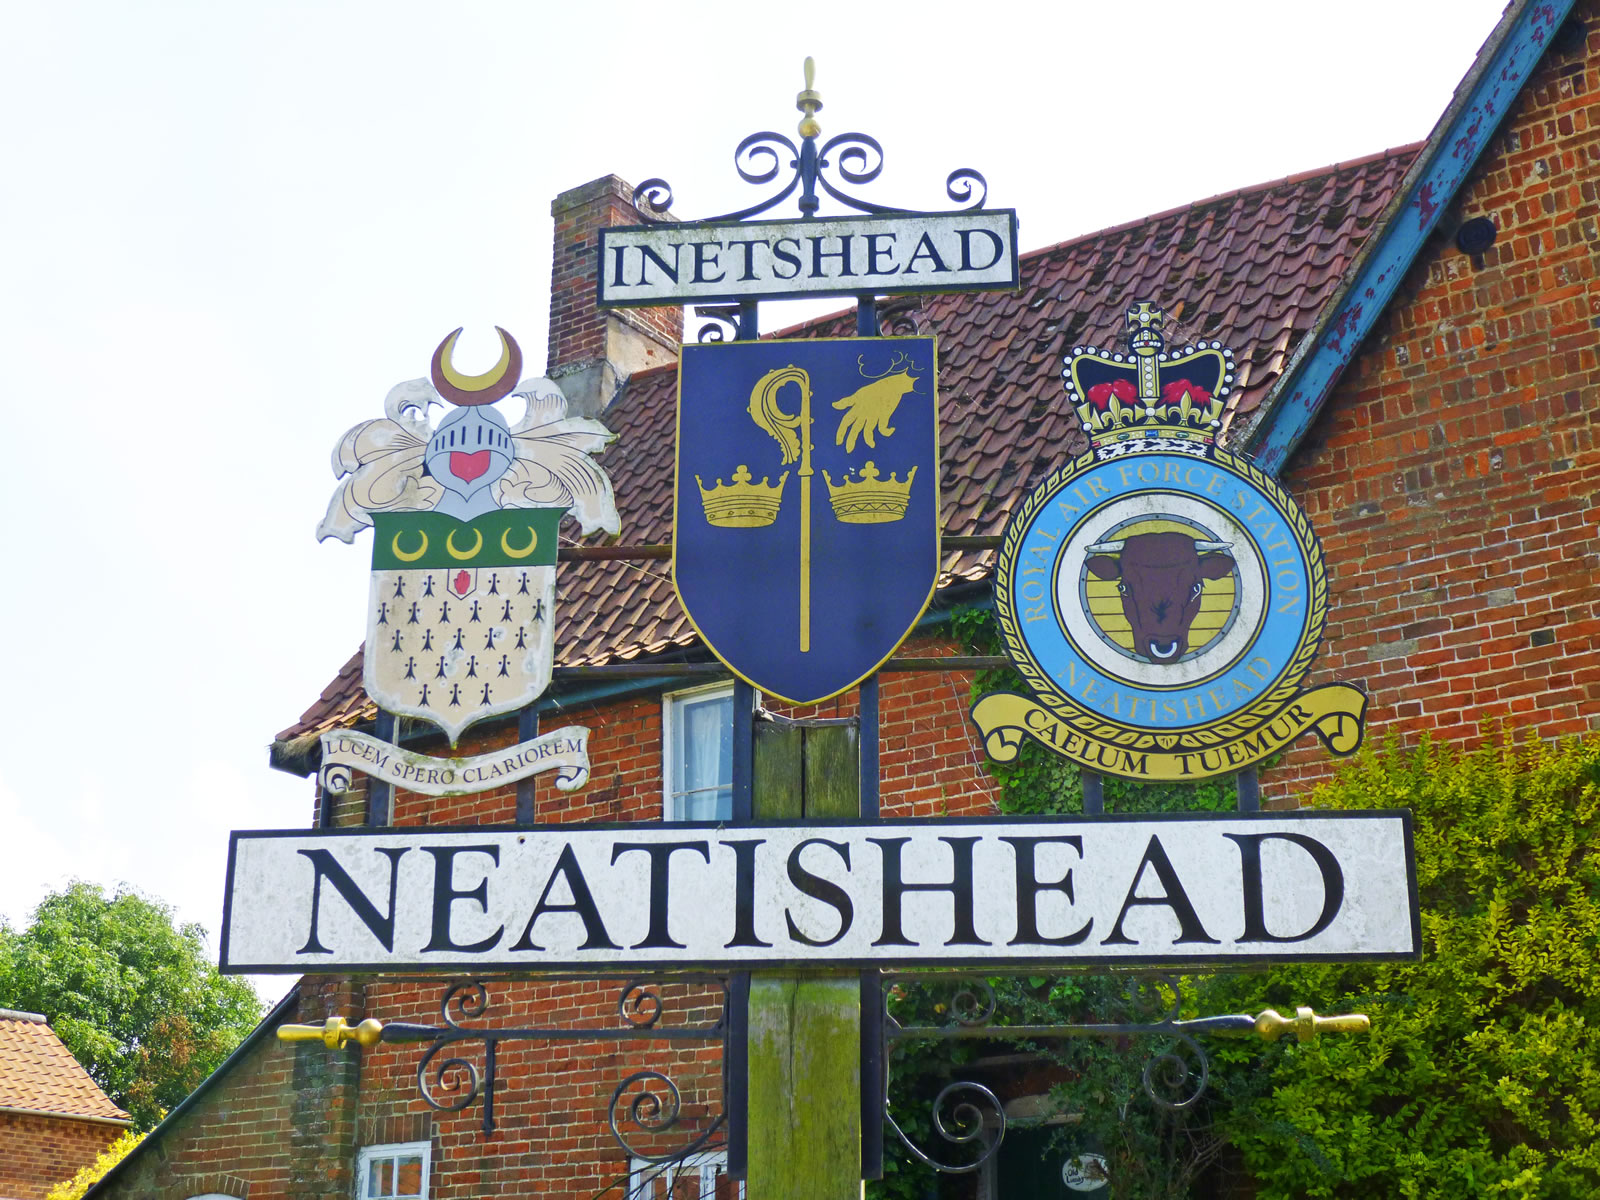 Neatishead, Norfolk Broads, including White Horse Inn and Community Shop1600 x 1200